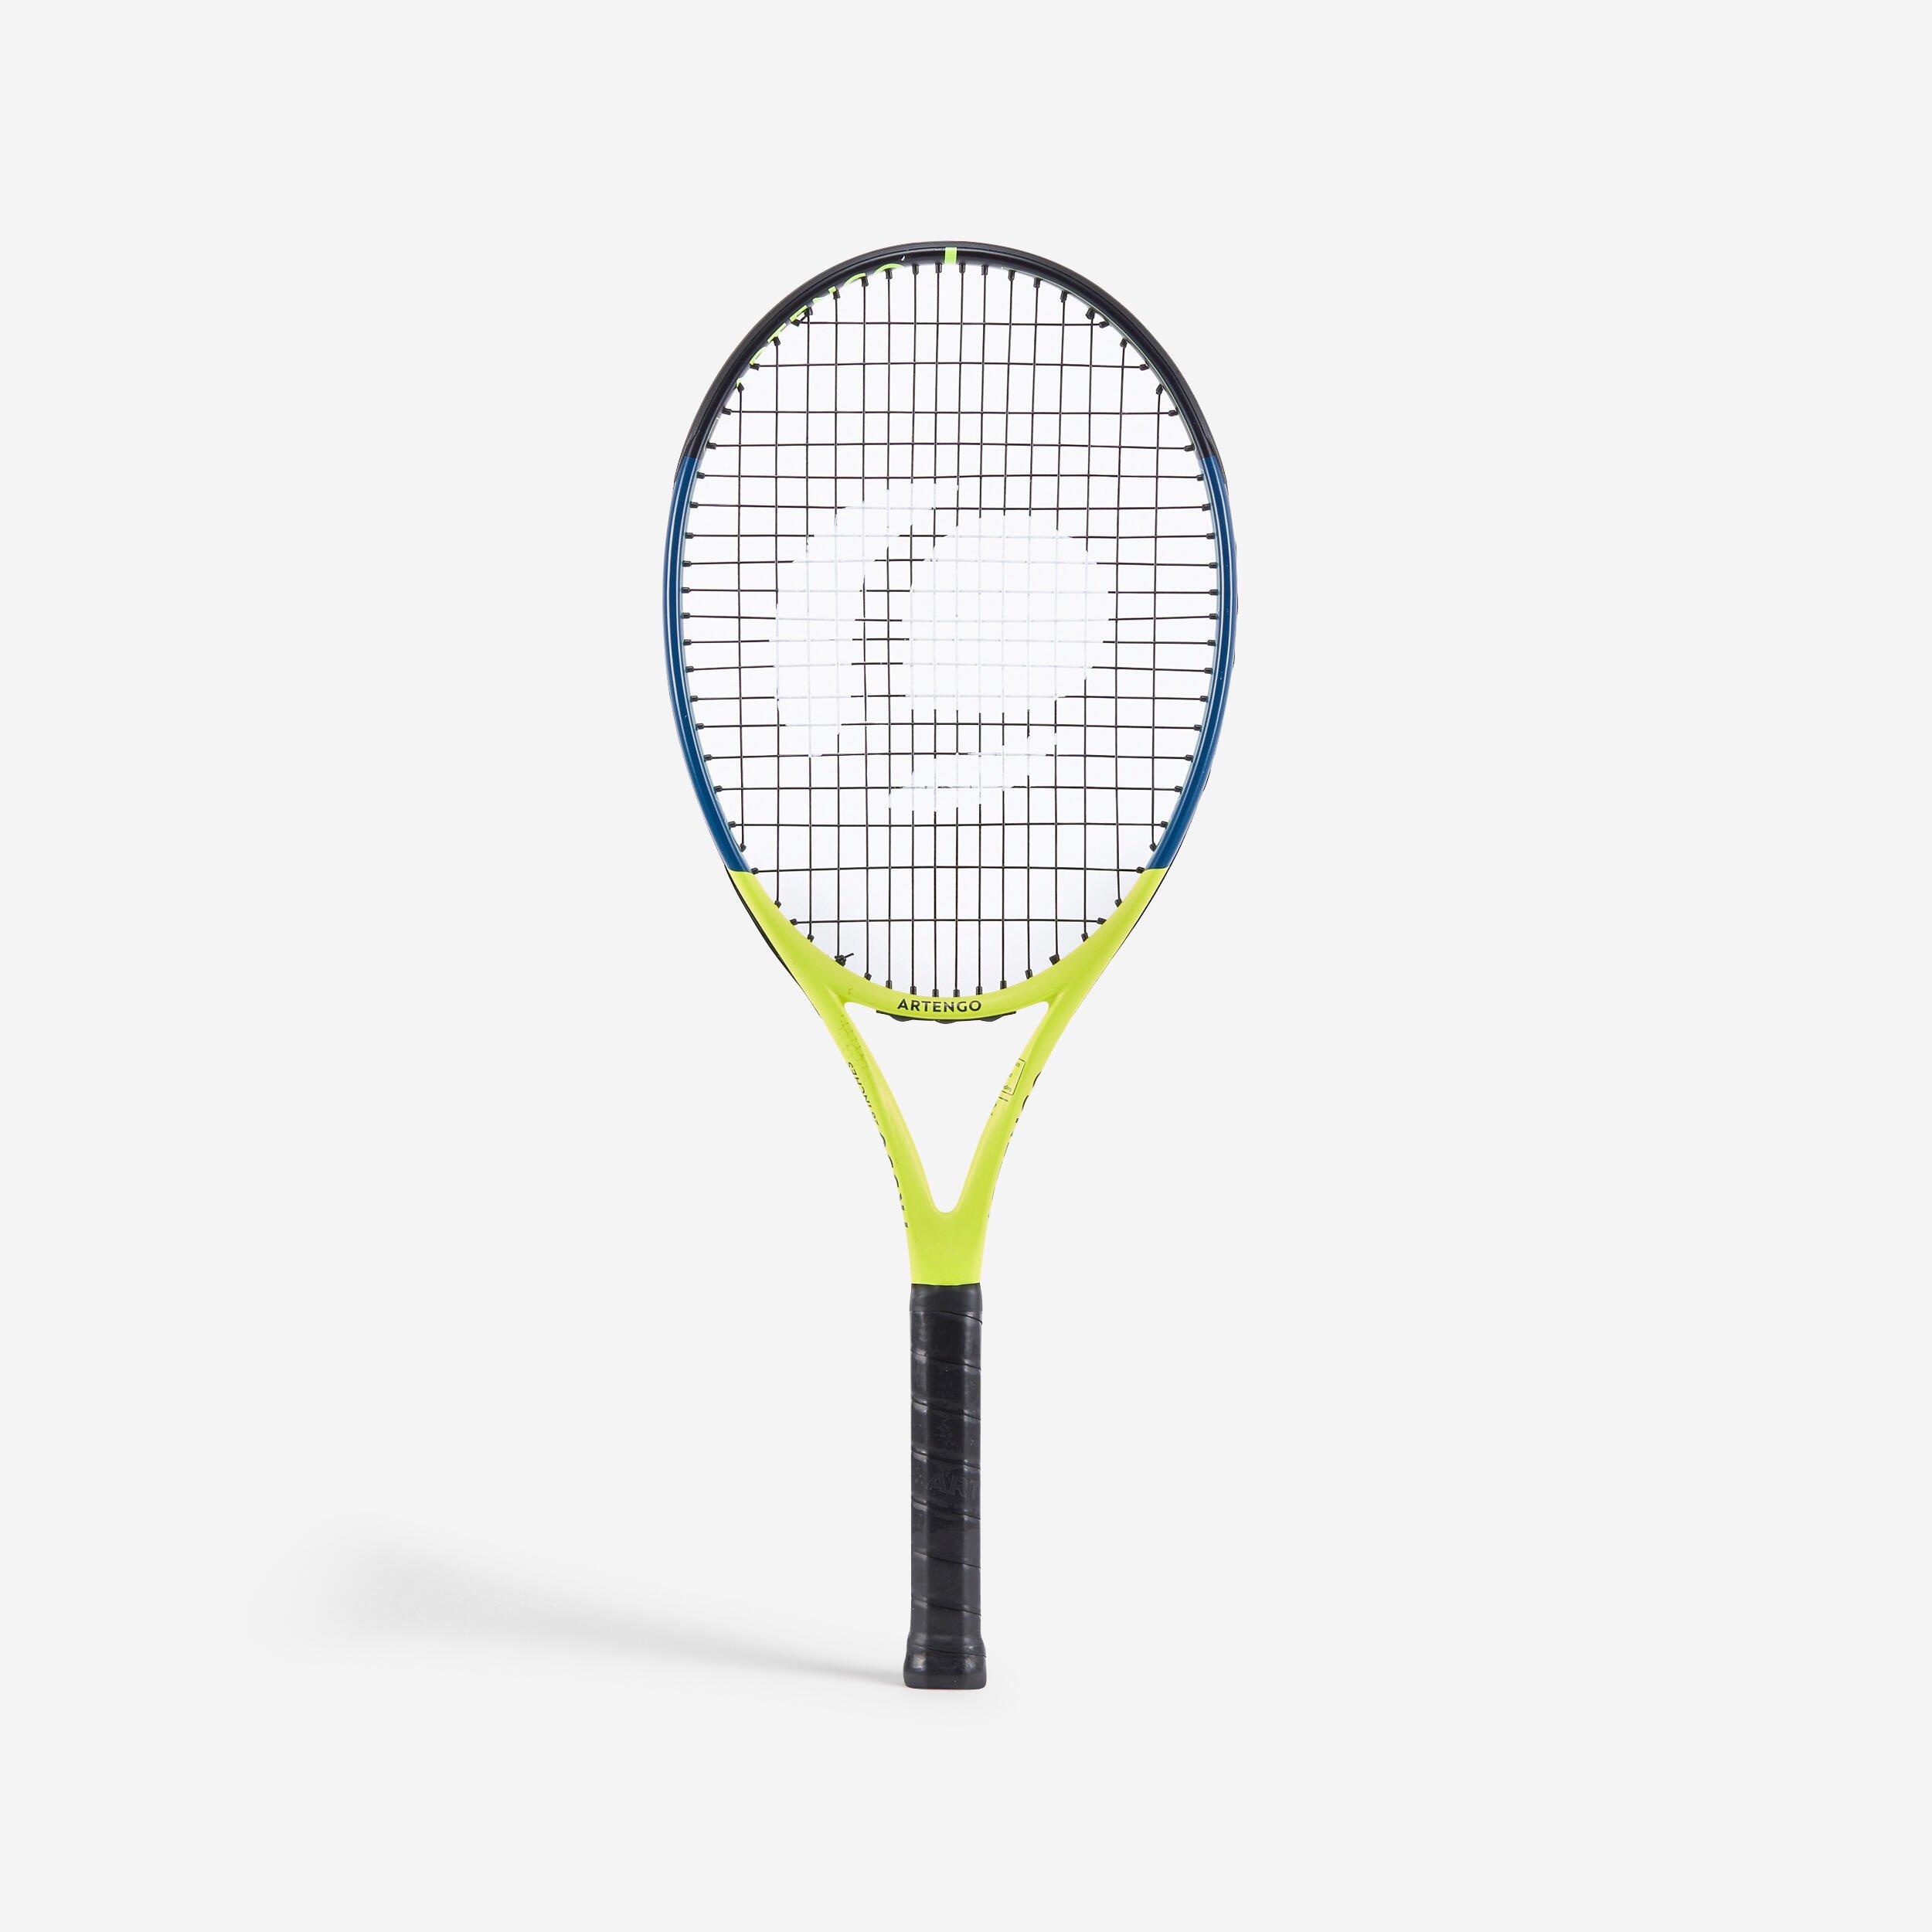 Decathlon Tr530 26 Tennis Racket